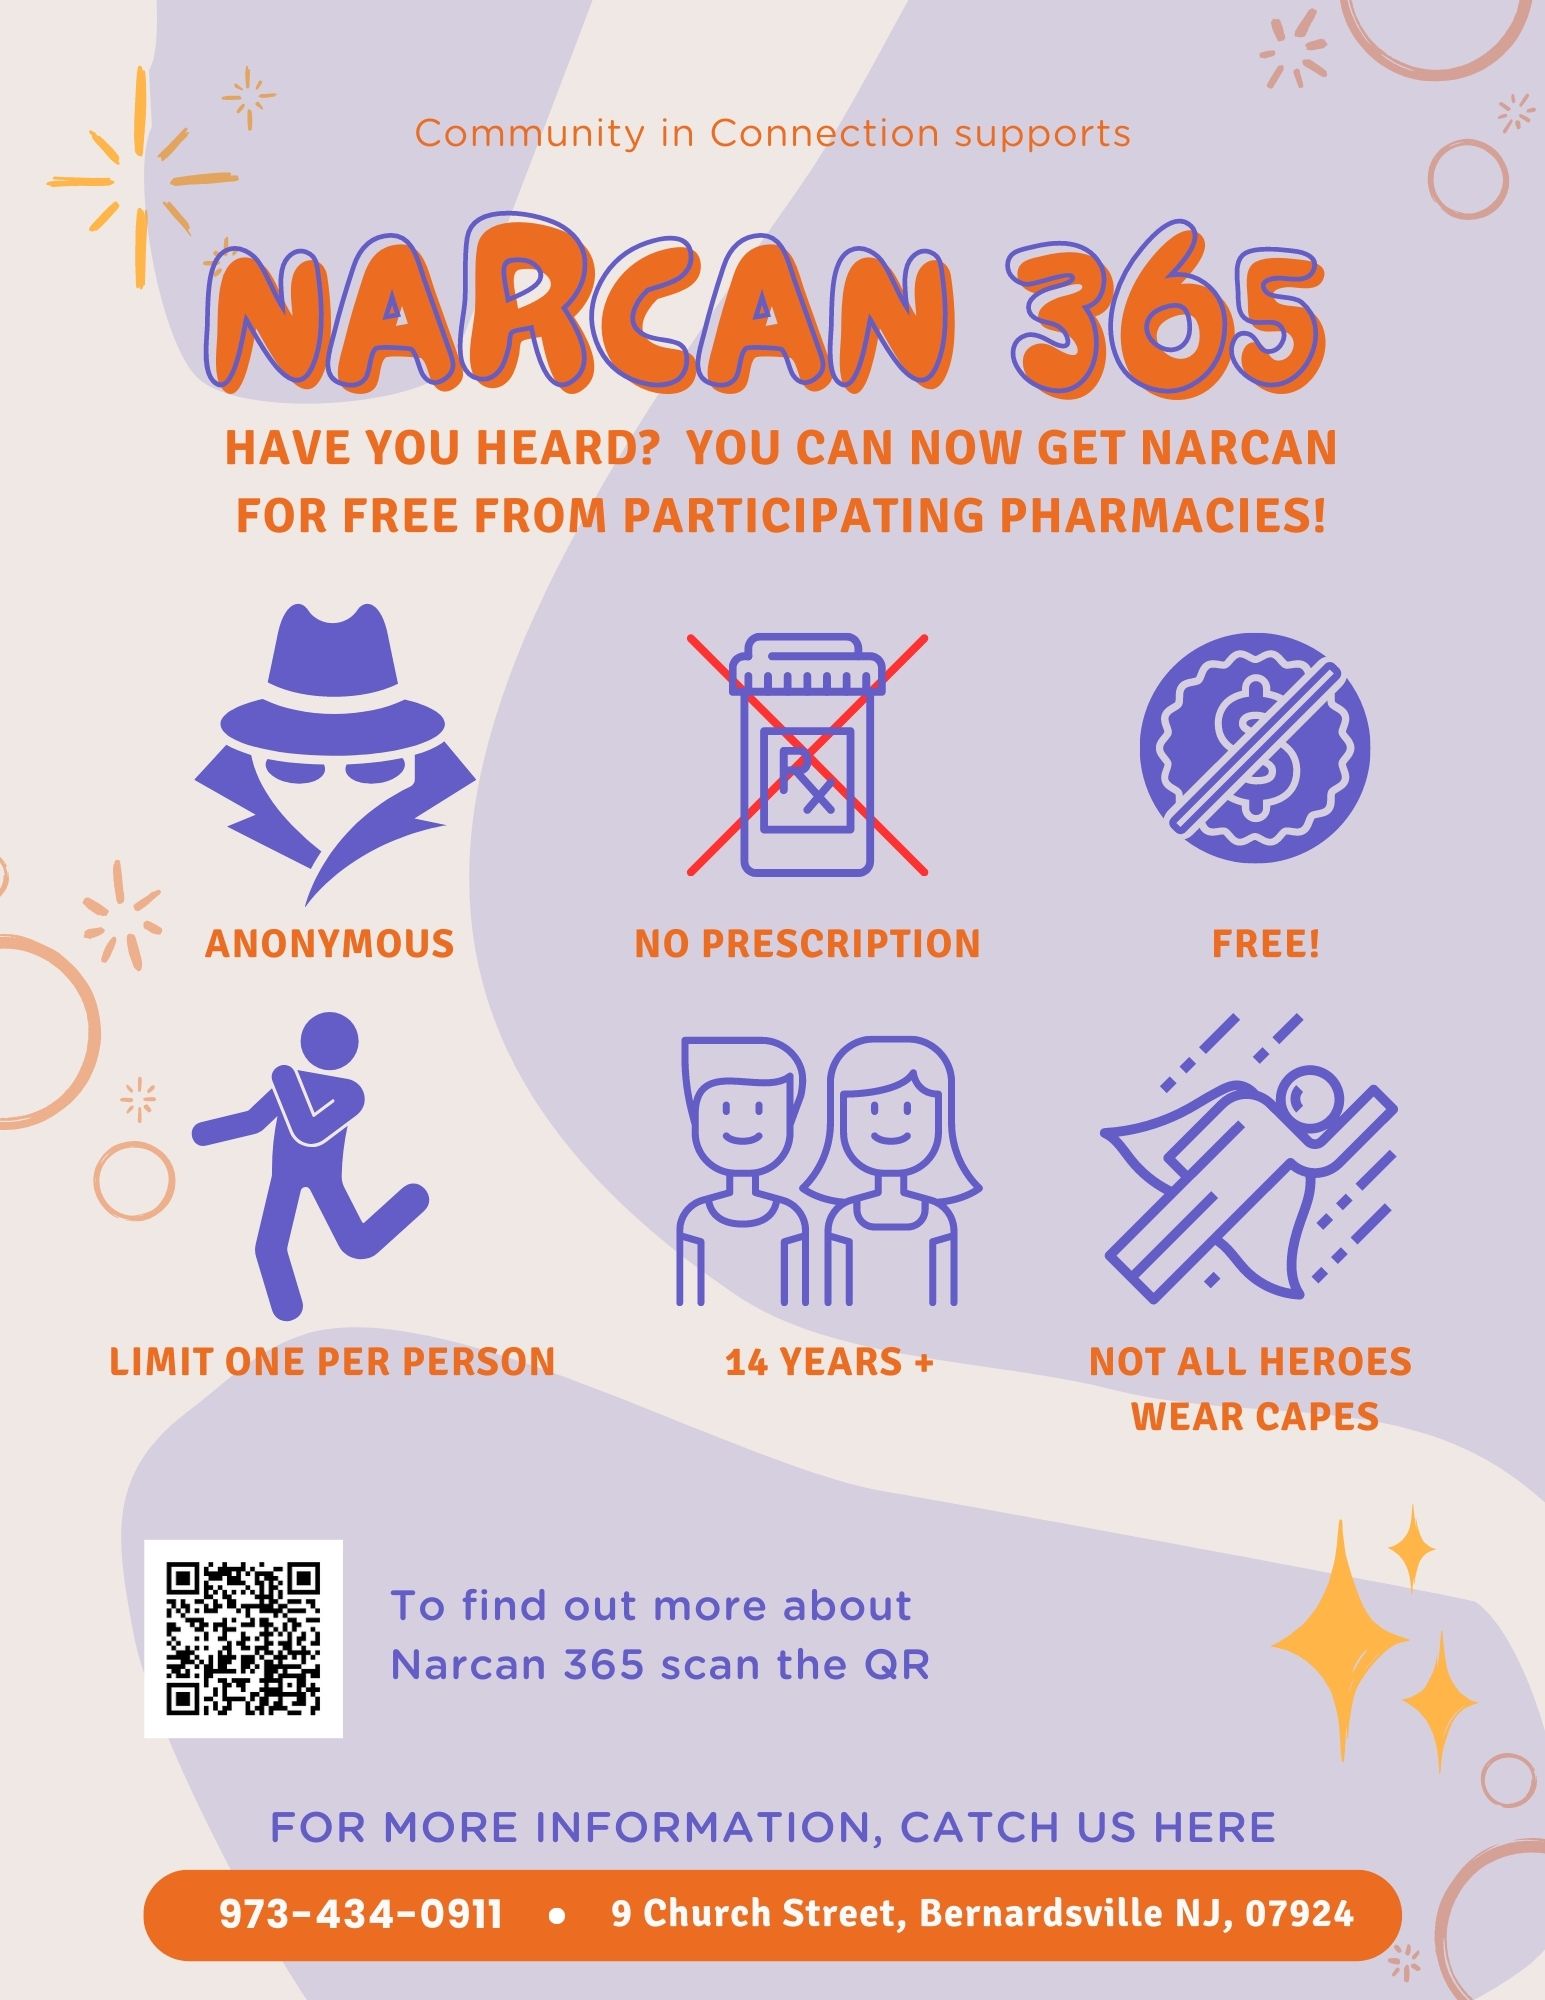 CIC Narcan 365